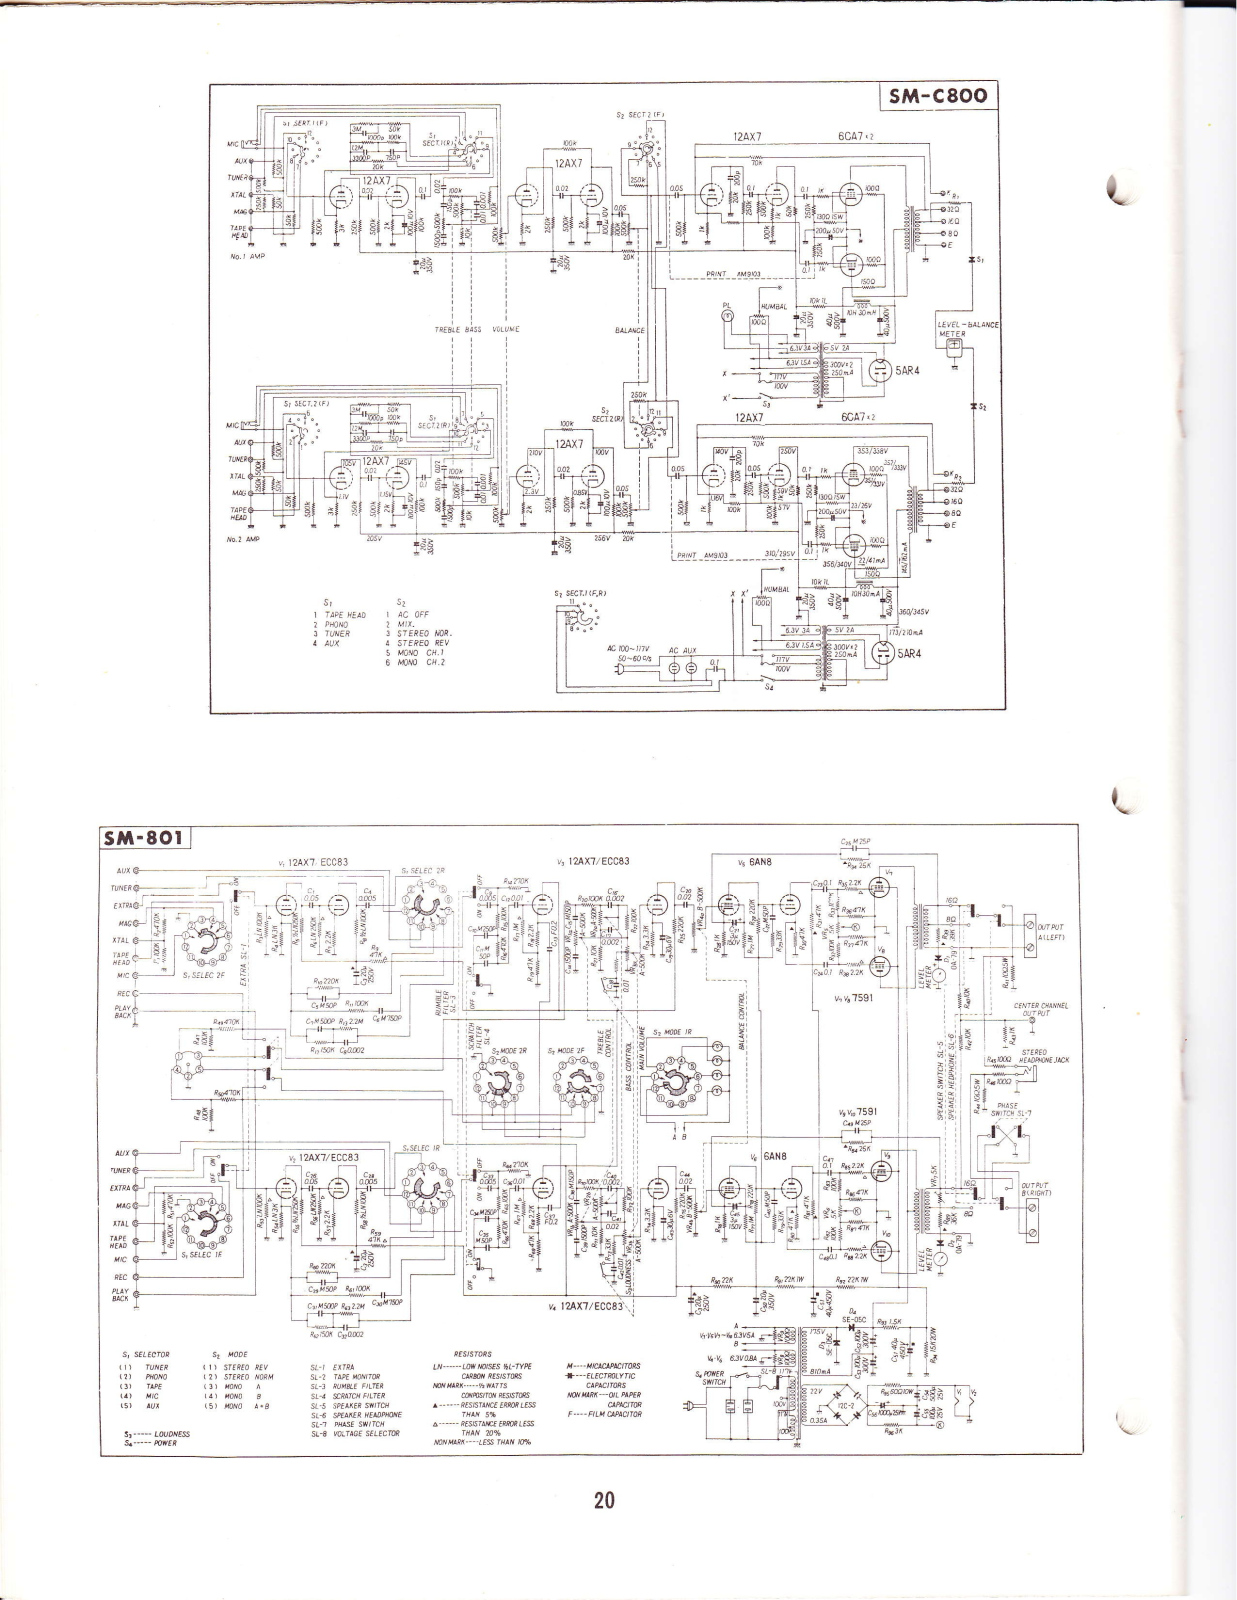 Pioneer SM-801, SMC-800 Schematic